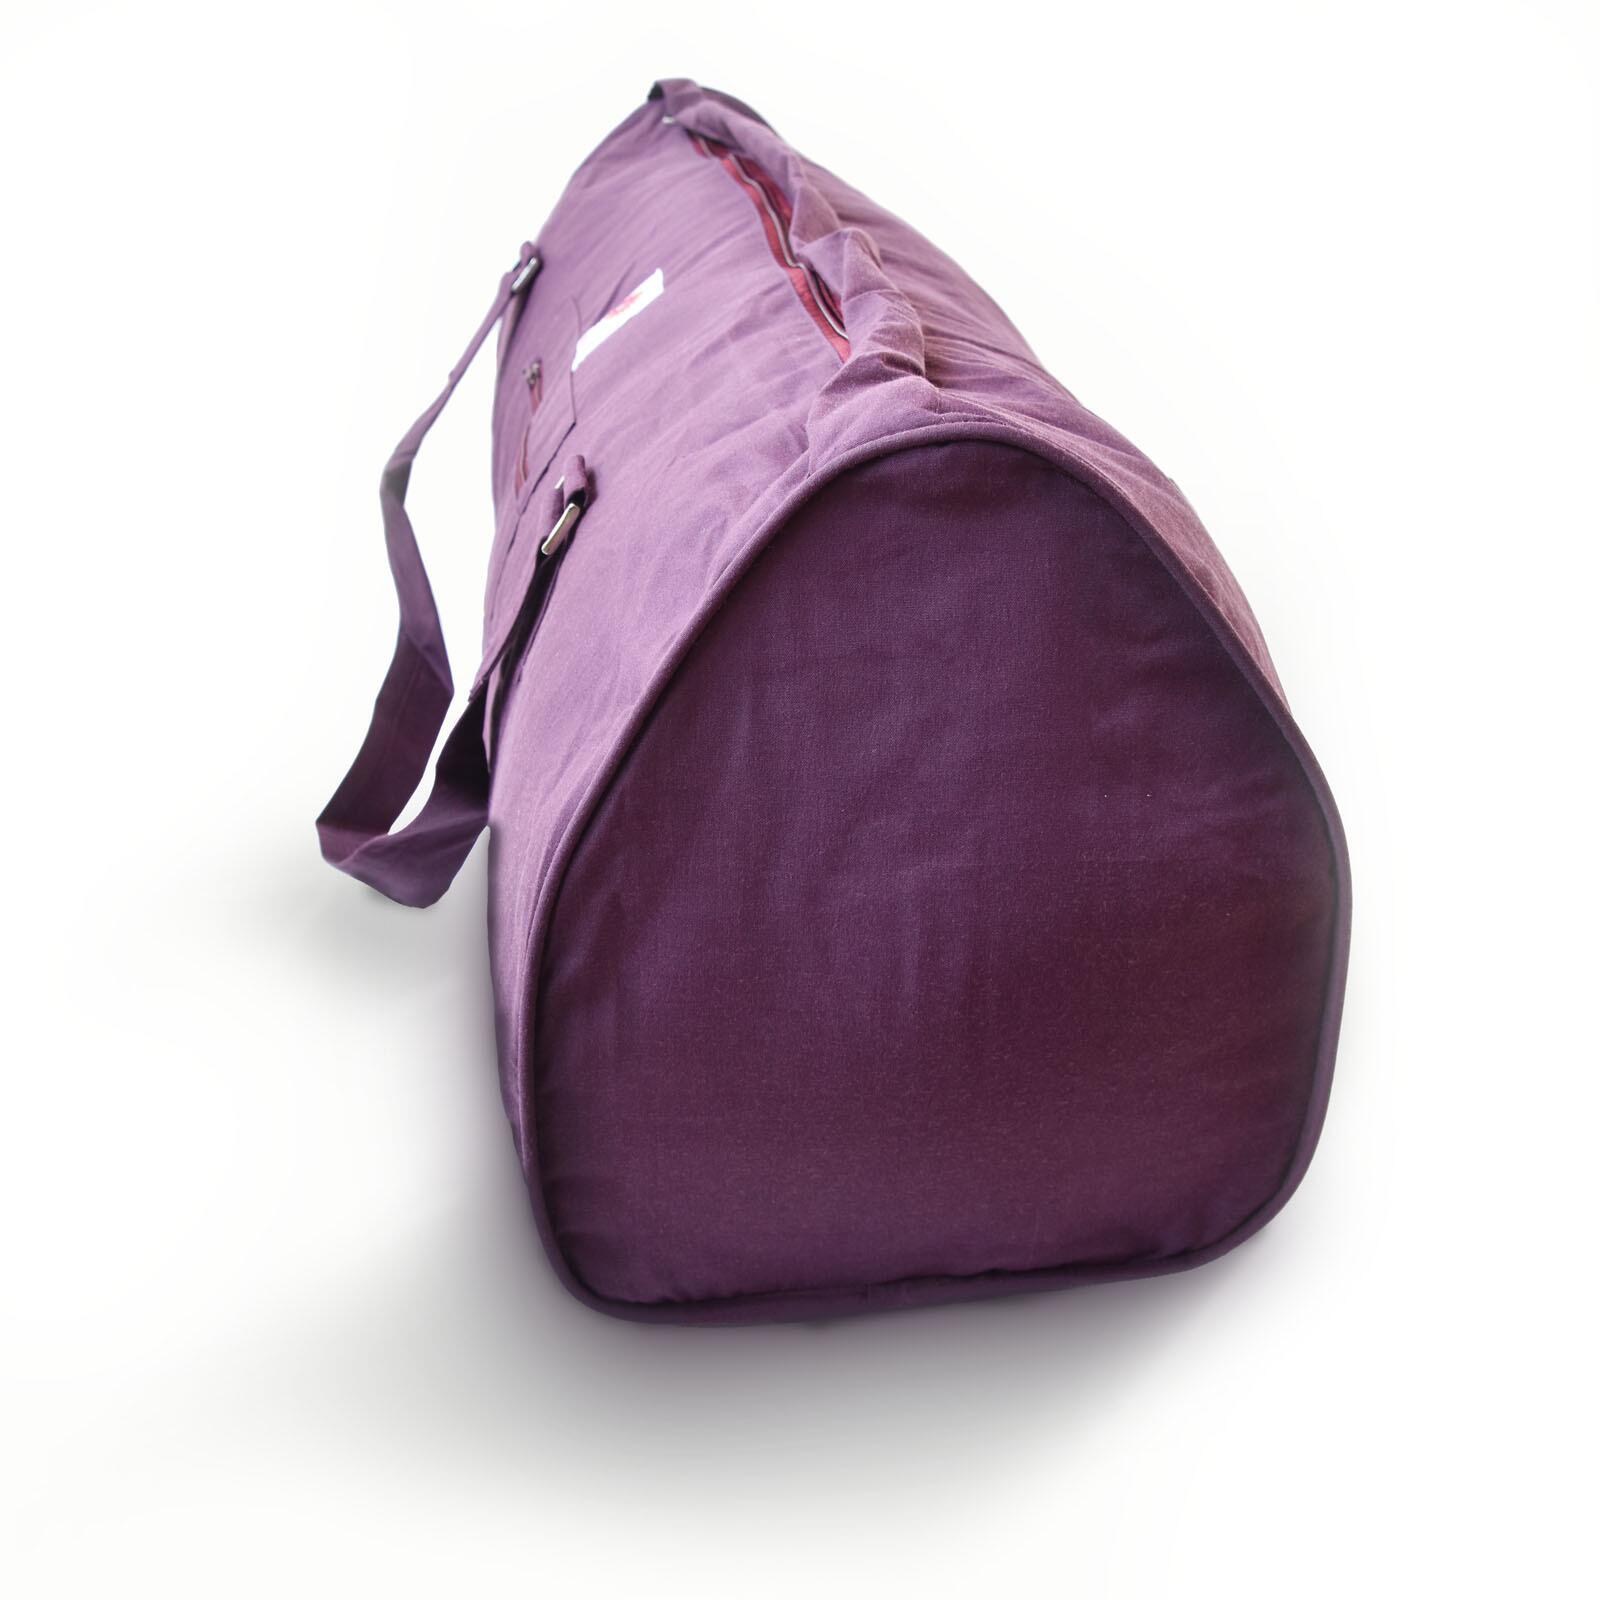 Elephant Yoga Kit Carrier Bag aubergine colour side view